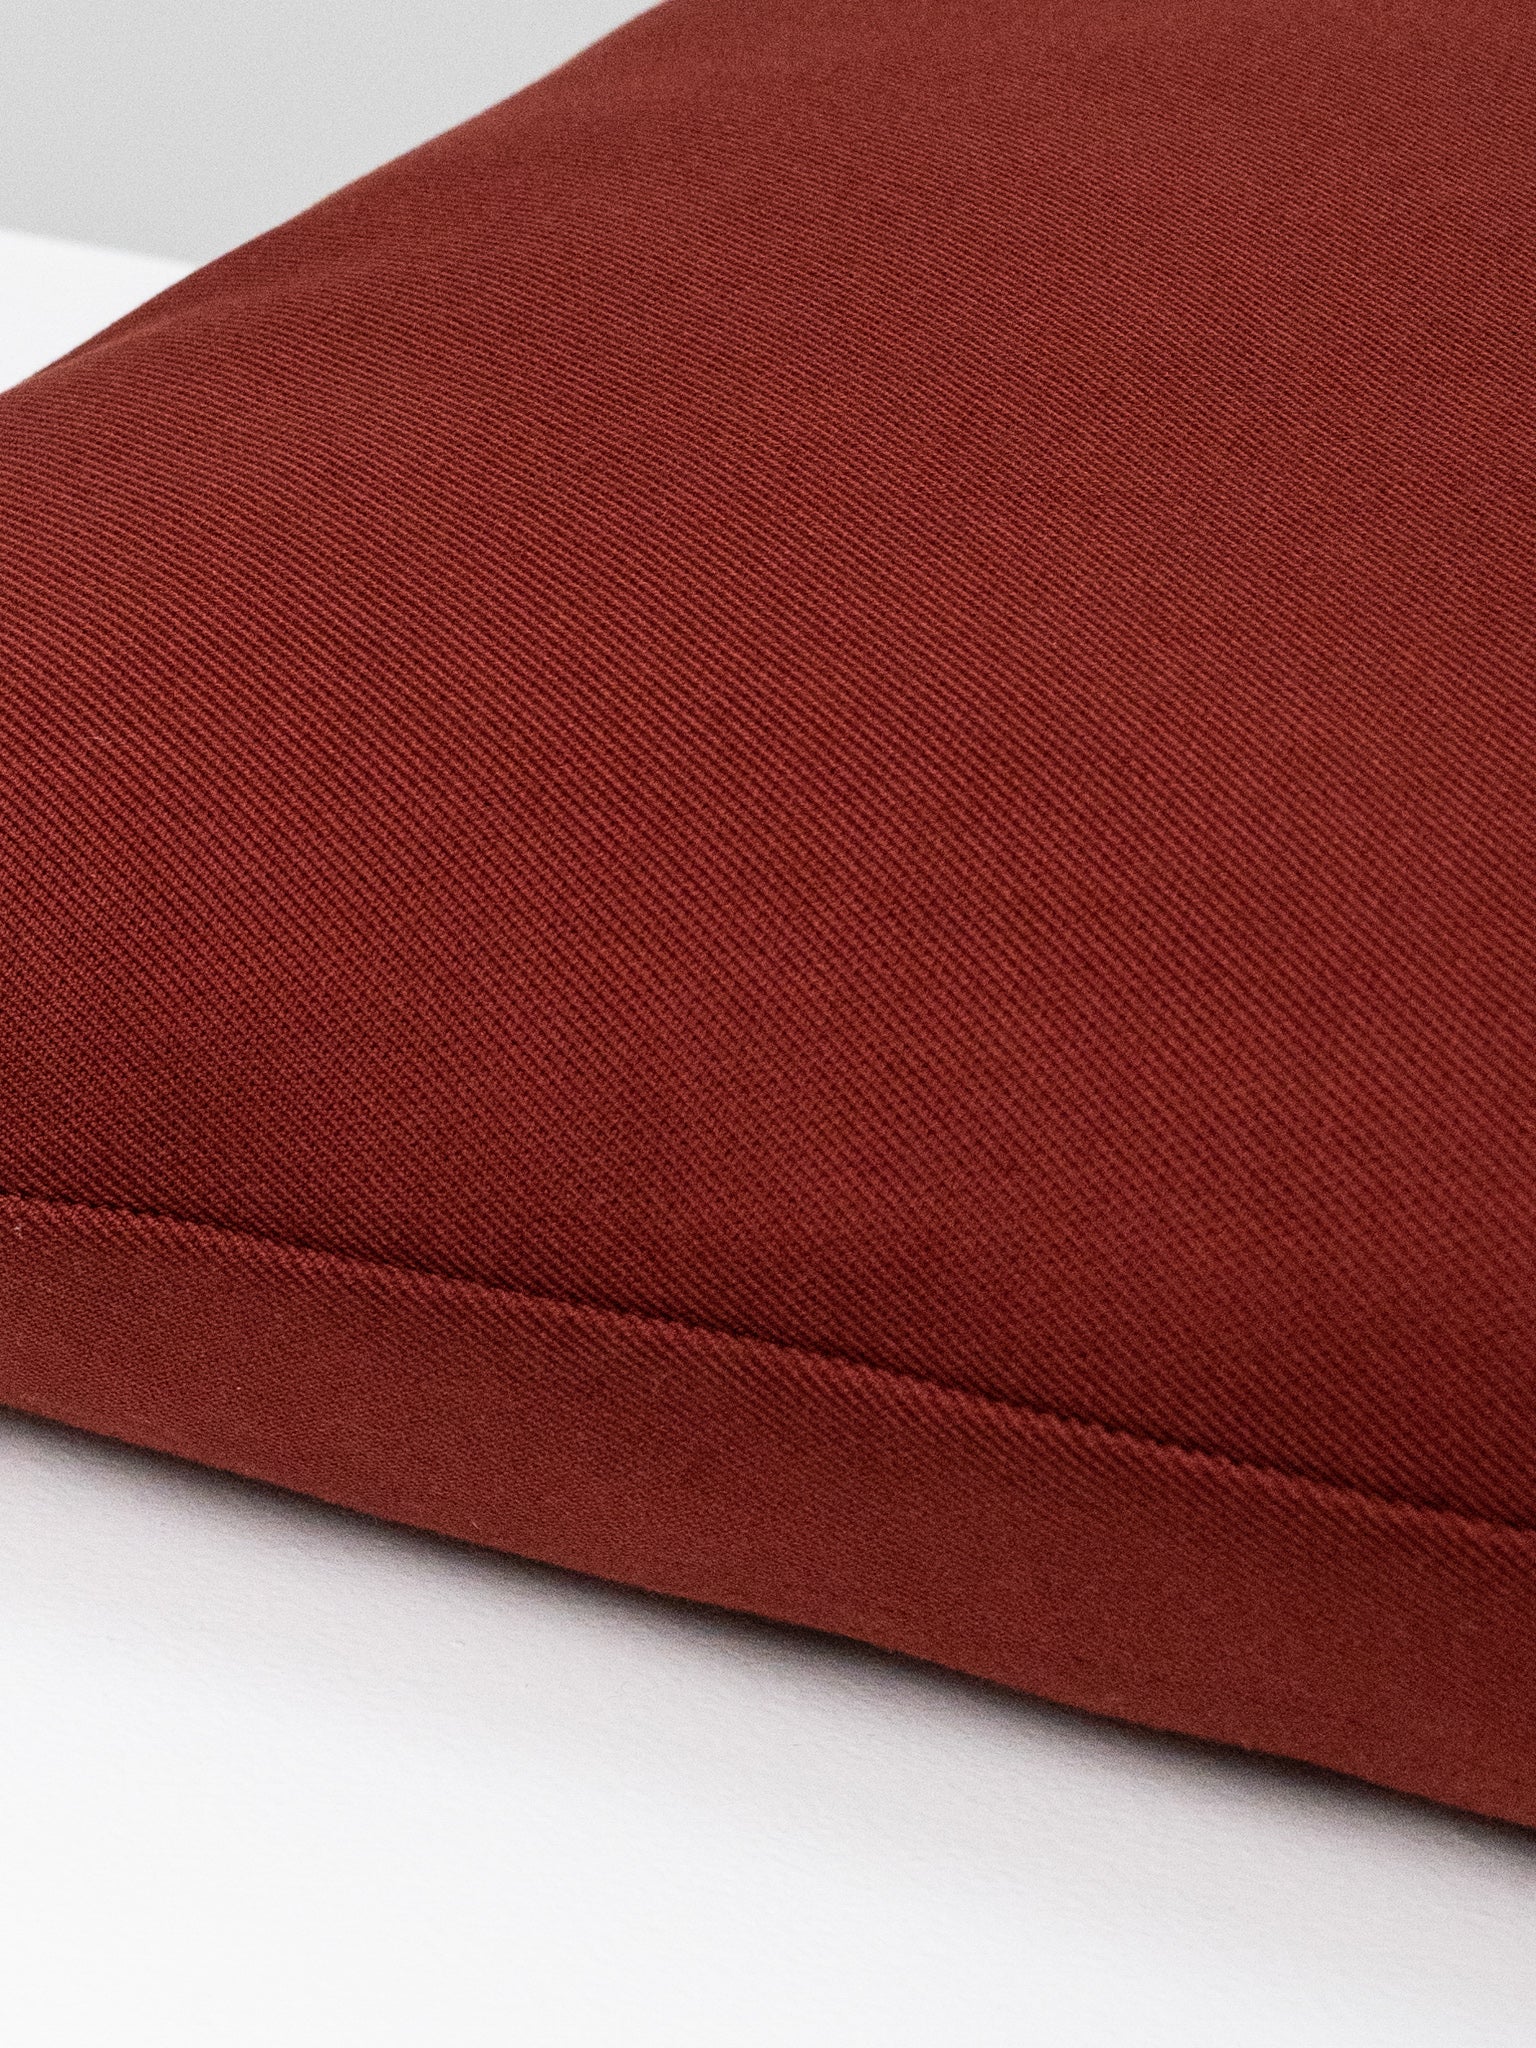 Cushion Fabric Samples